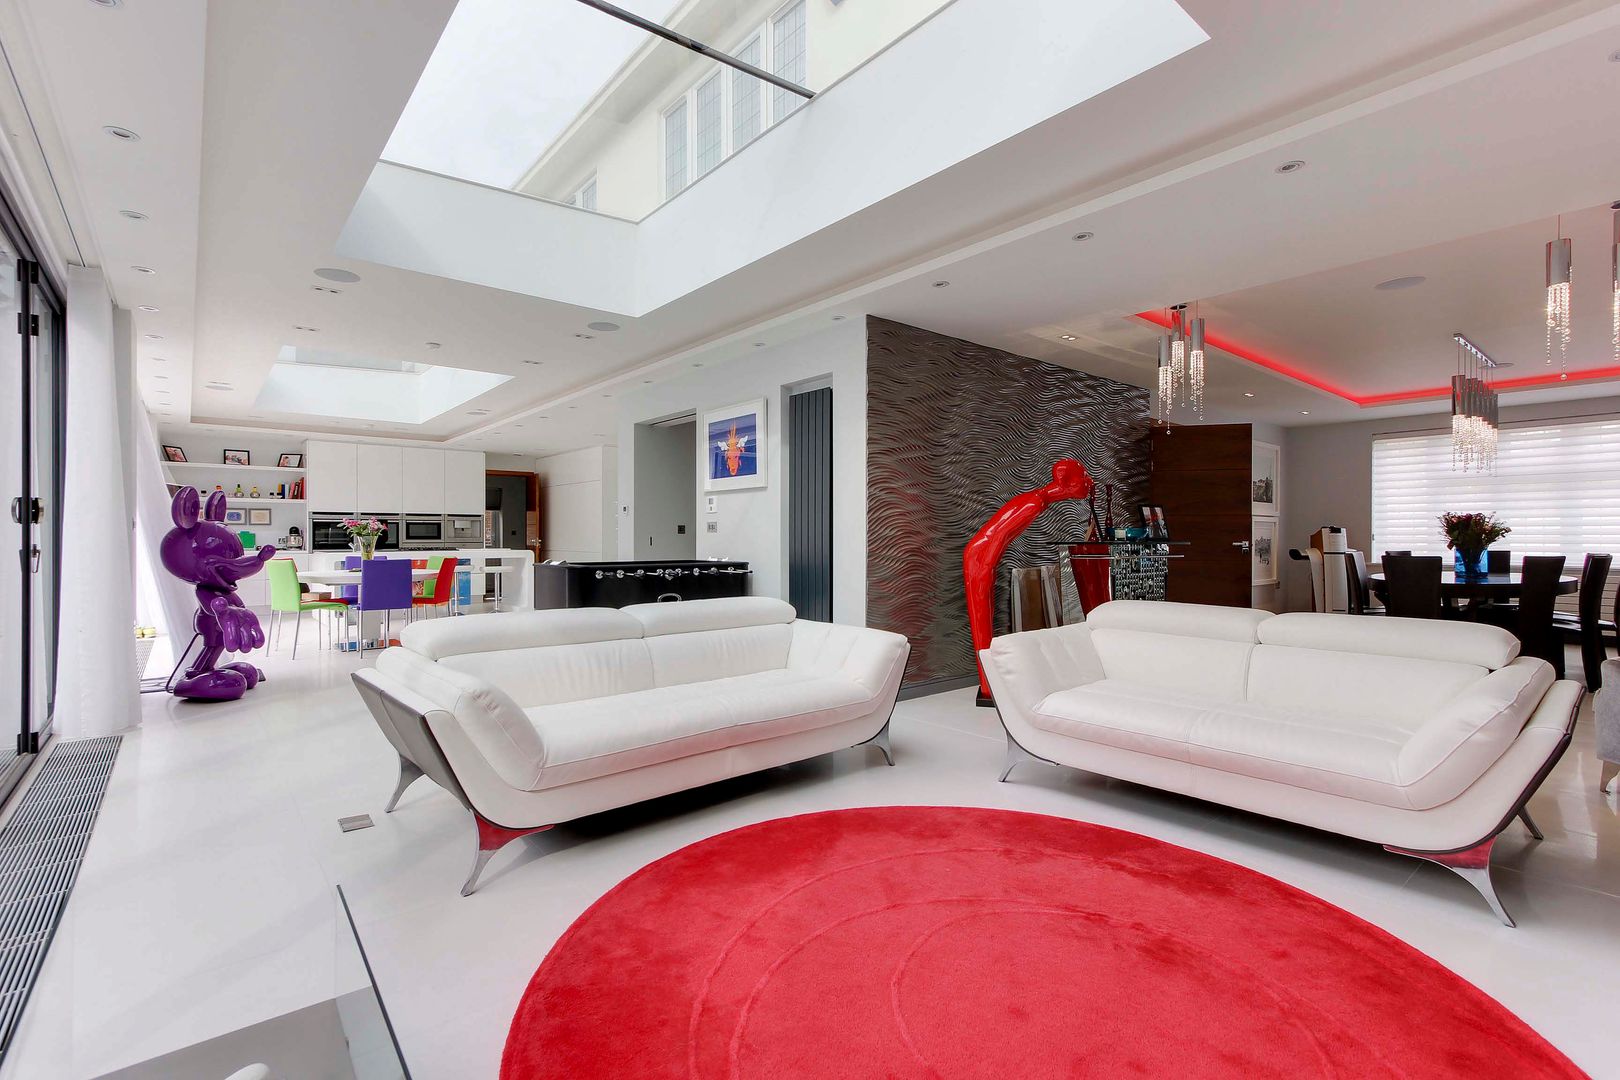 Totteridge N20 modern extension and full refurbishment Compass Design & Build Modern living room lounge area , open plan living